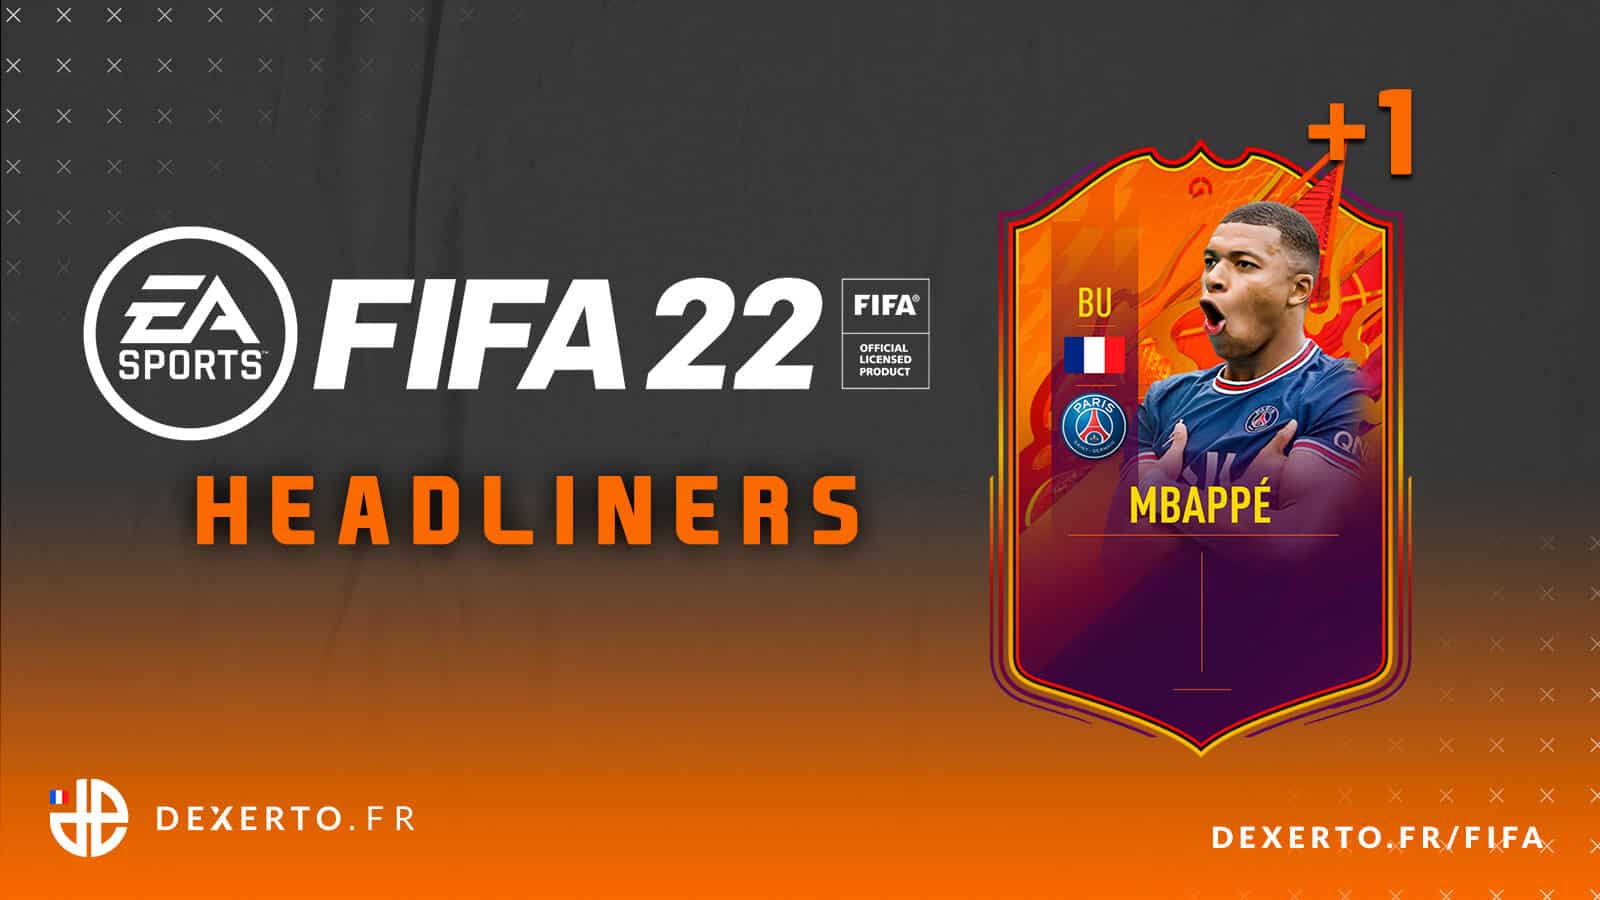 FIFA 22 Headliners fut améliorations